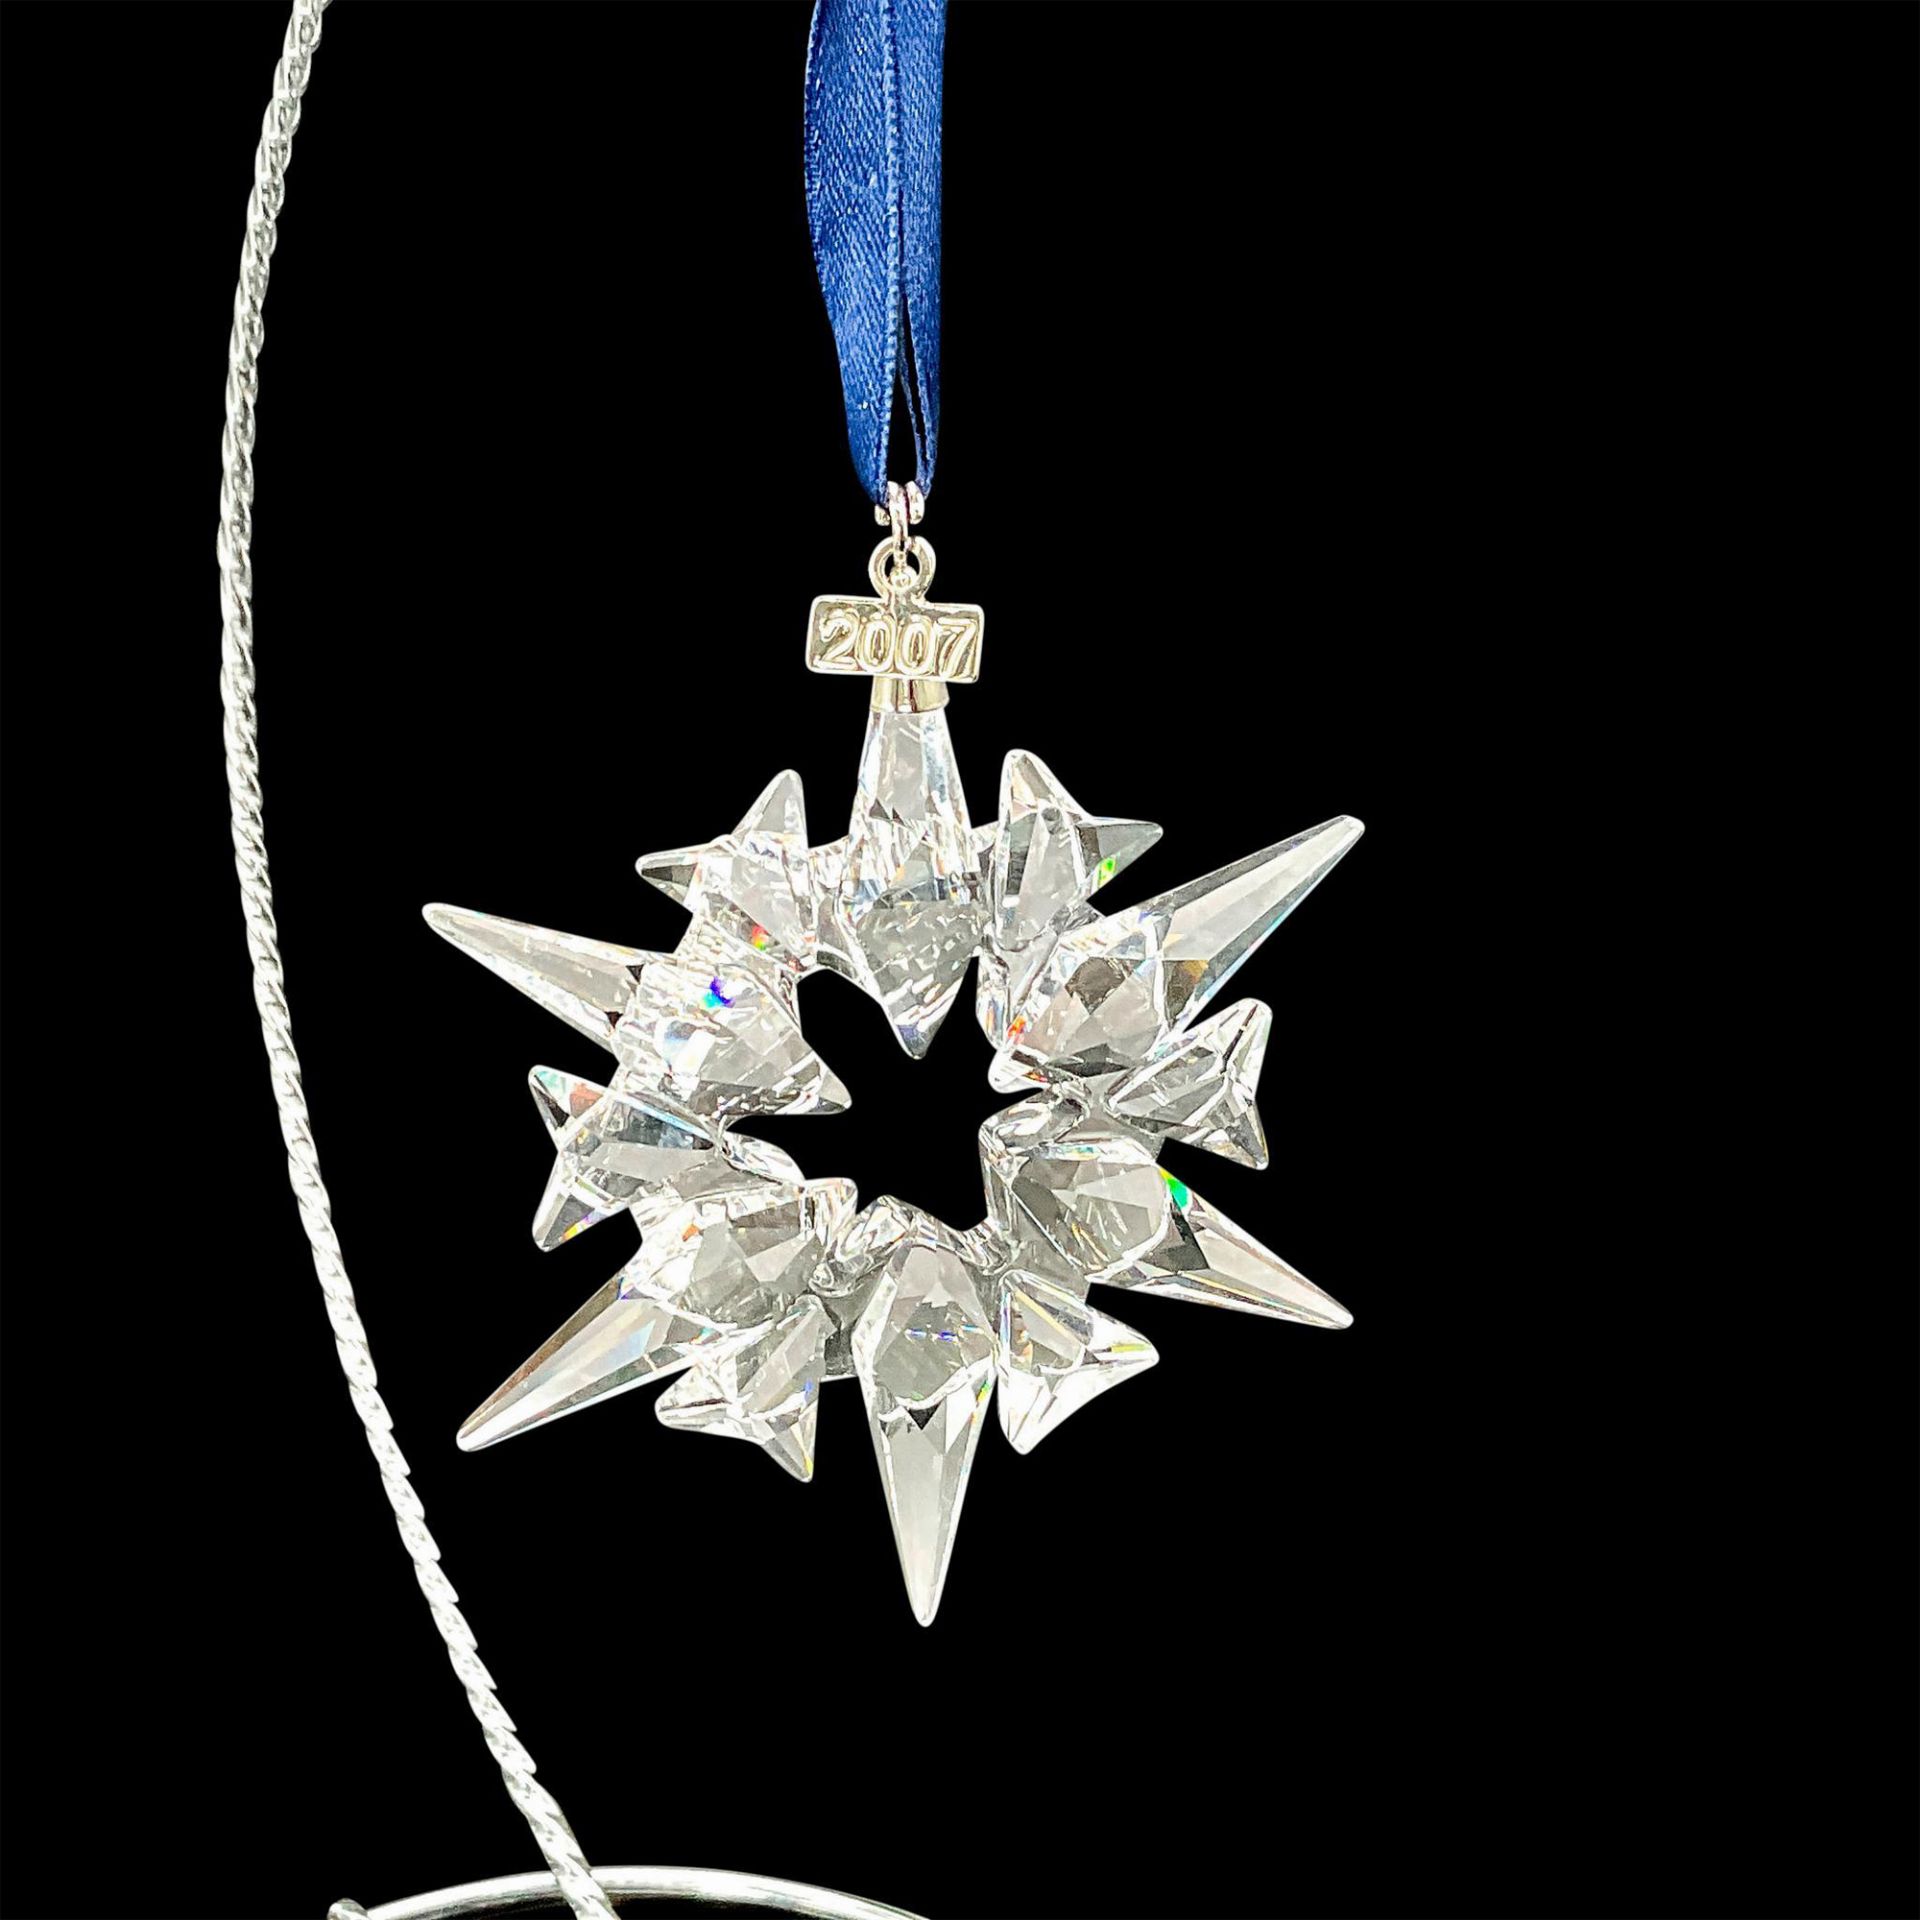 Swarovski Crystal Ornament, Christmas Star with Stand - Image 2 of 3